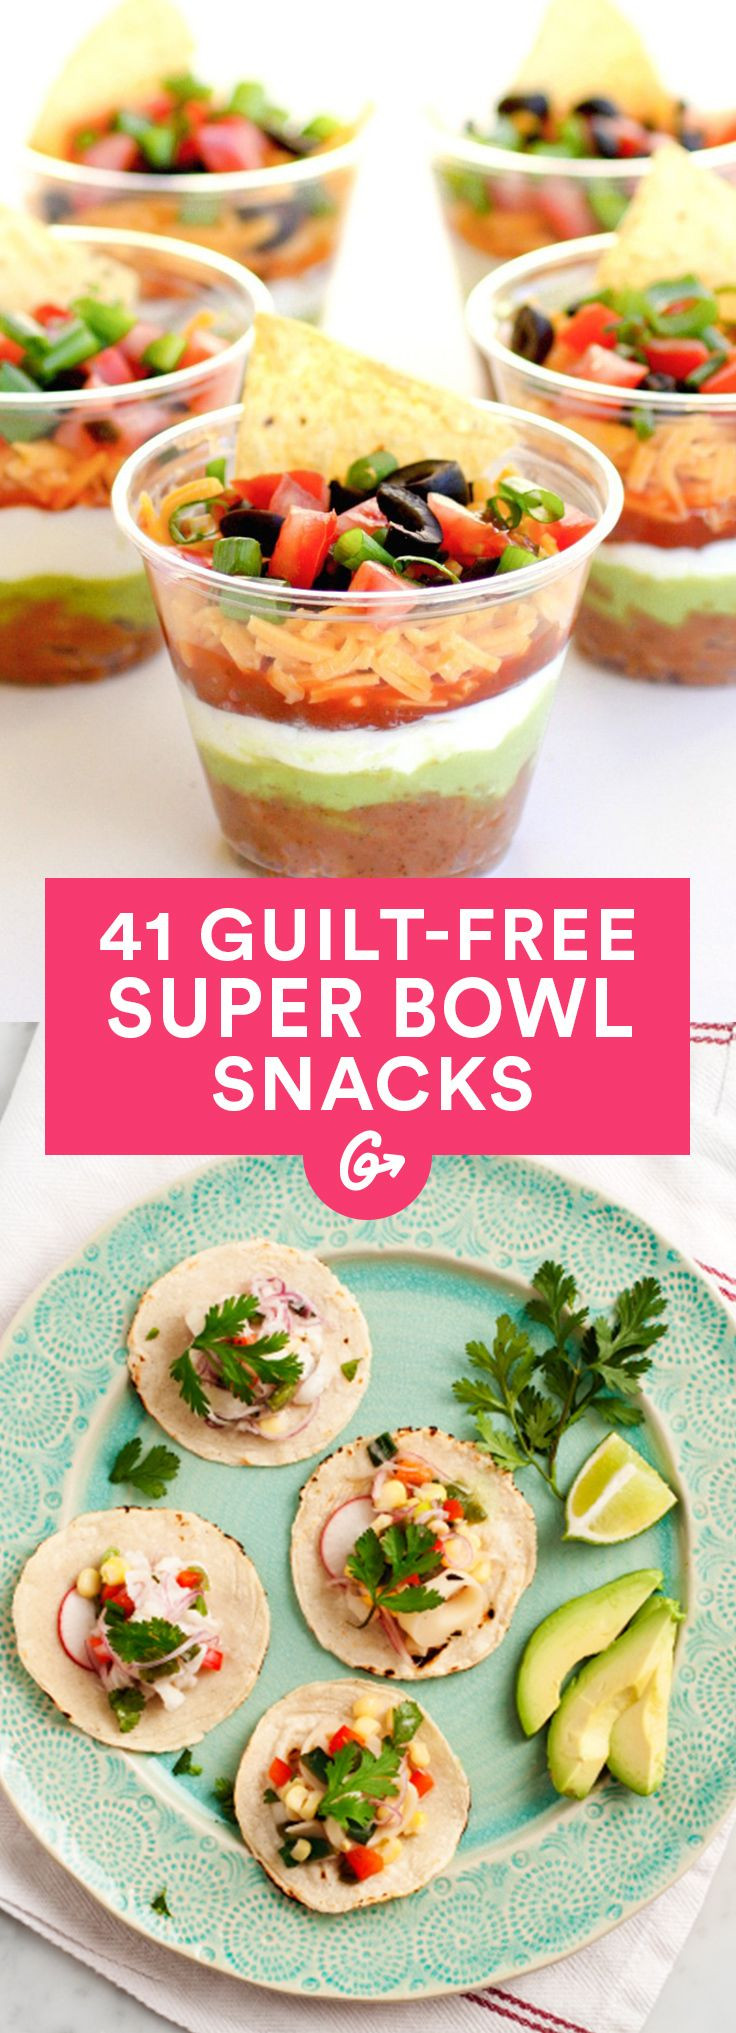 Super Bowl Munchies Recipes
 32 Healthy Super Bowl Snacks